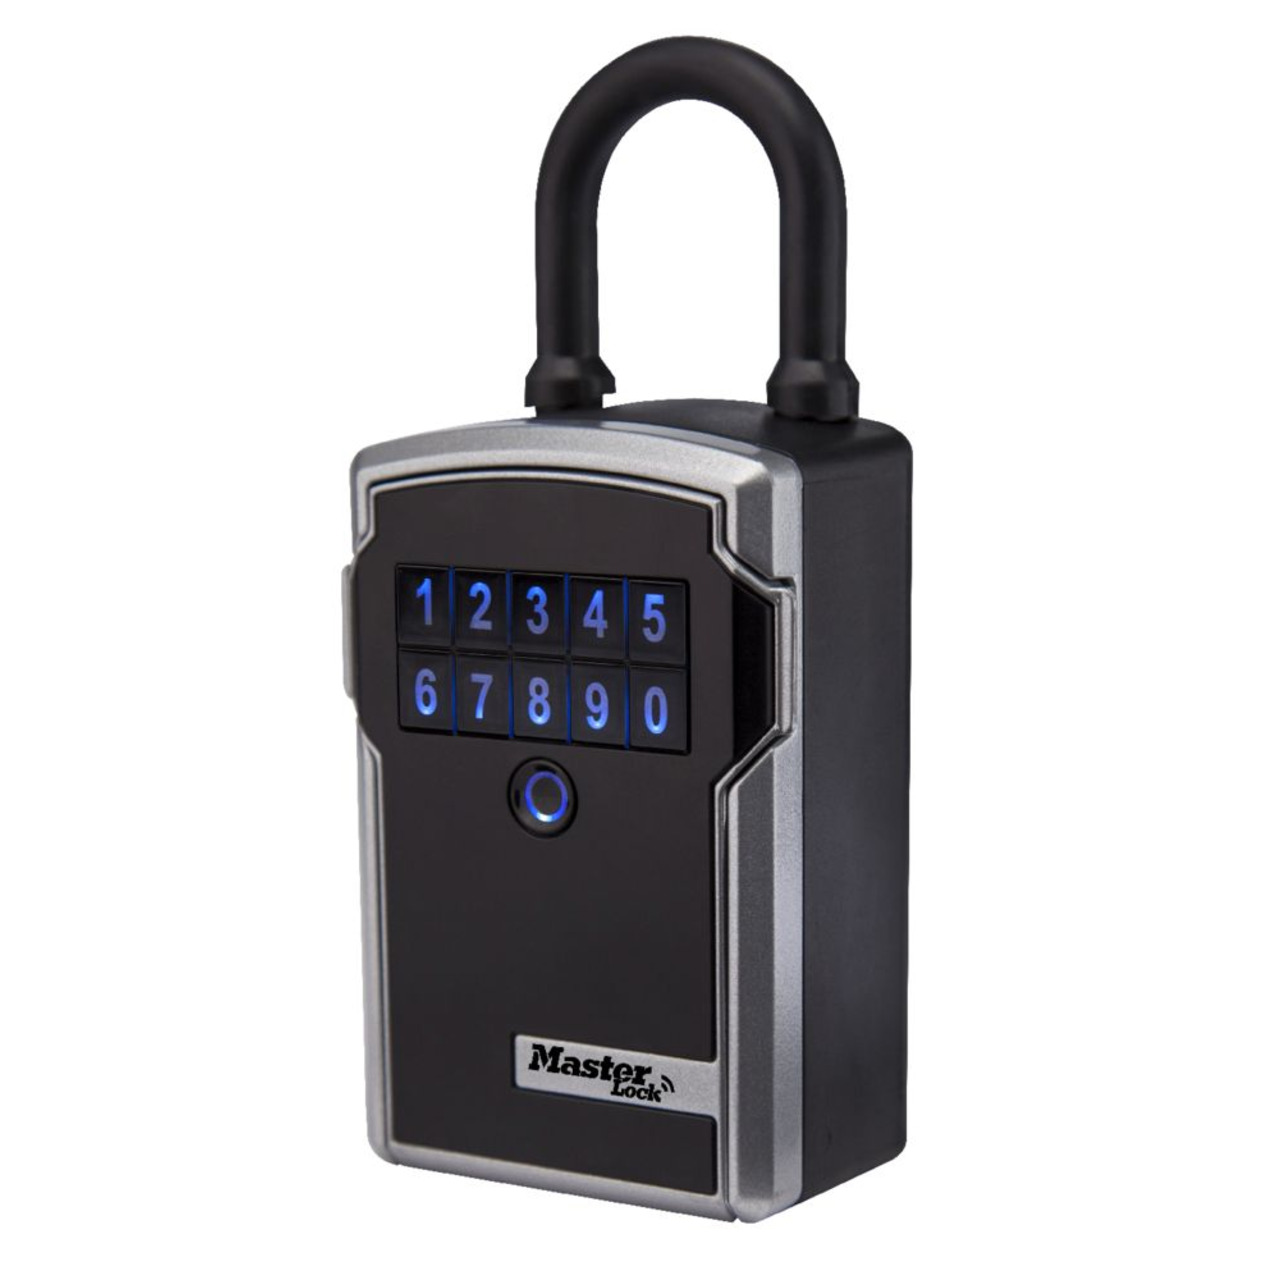 Master Lock Bluetooth-Schlüsselsafe mit Bügel 5440EURD Select Access SMART- Zugriff per Smartphone